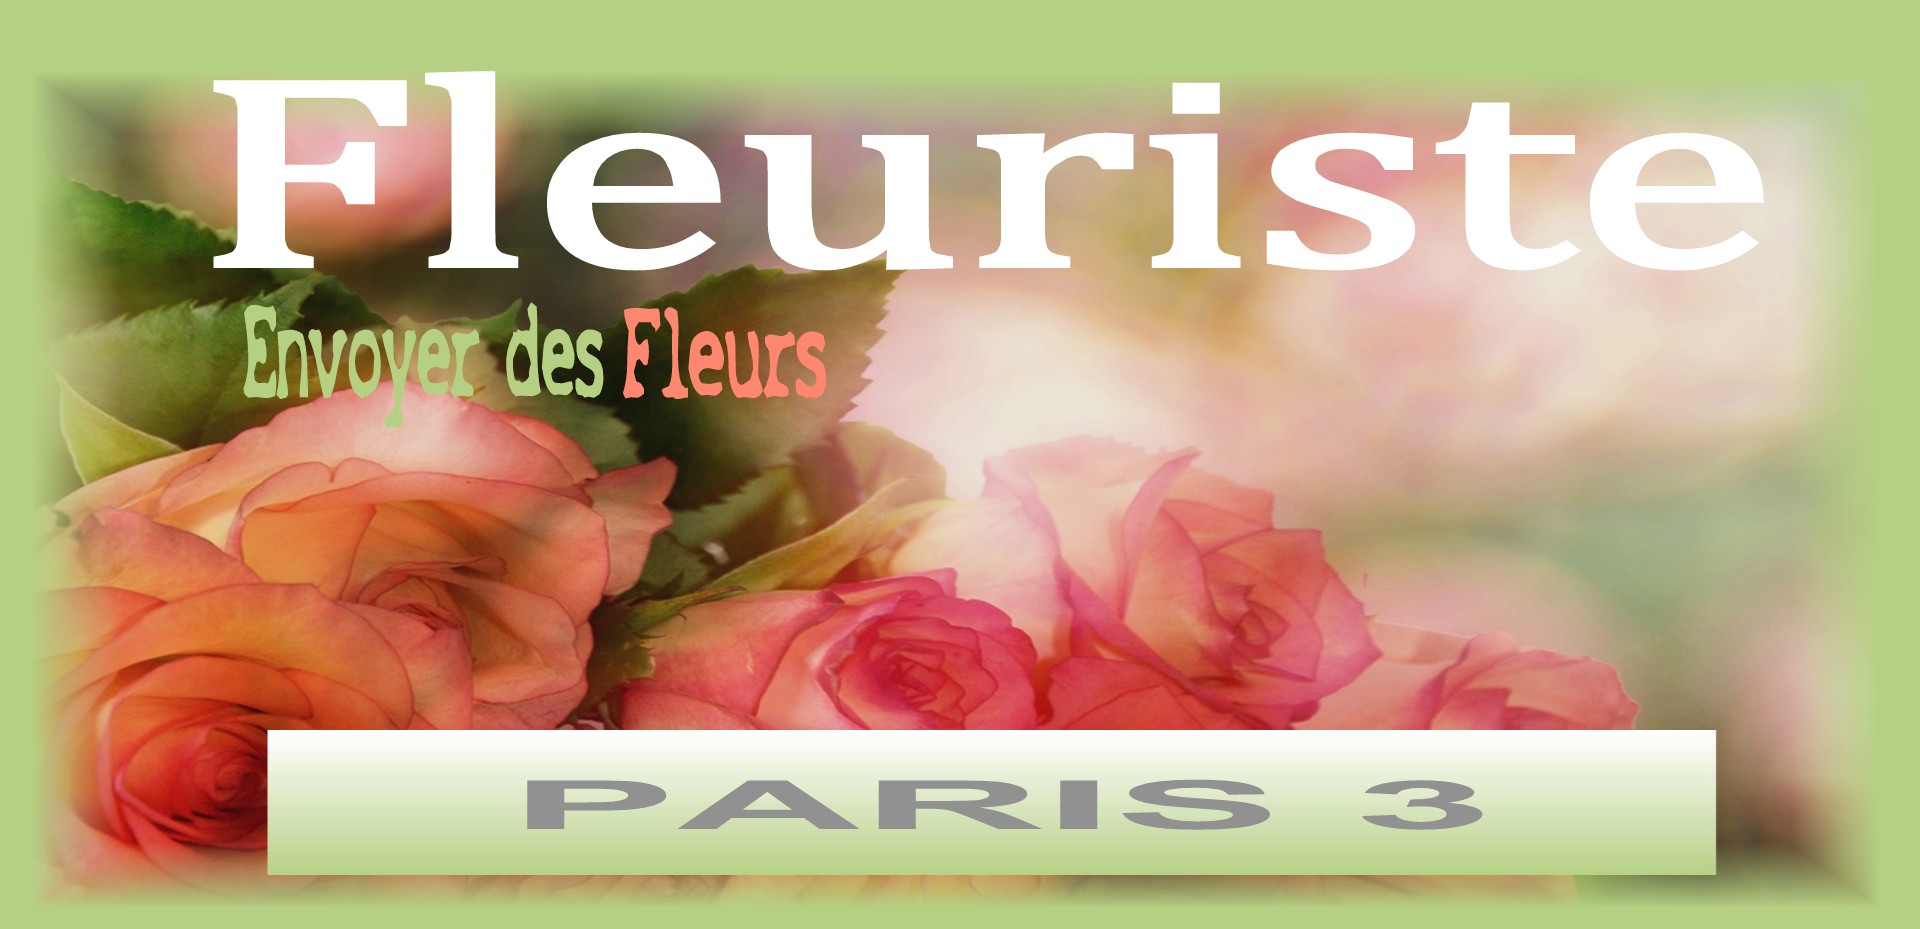 FLEURISTE PARIS 2